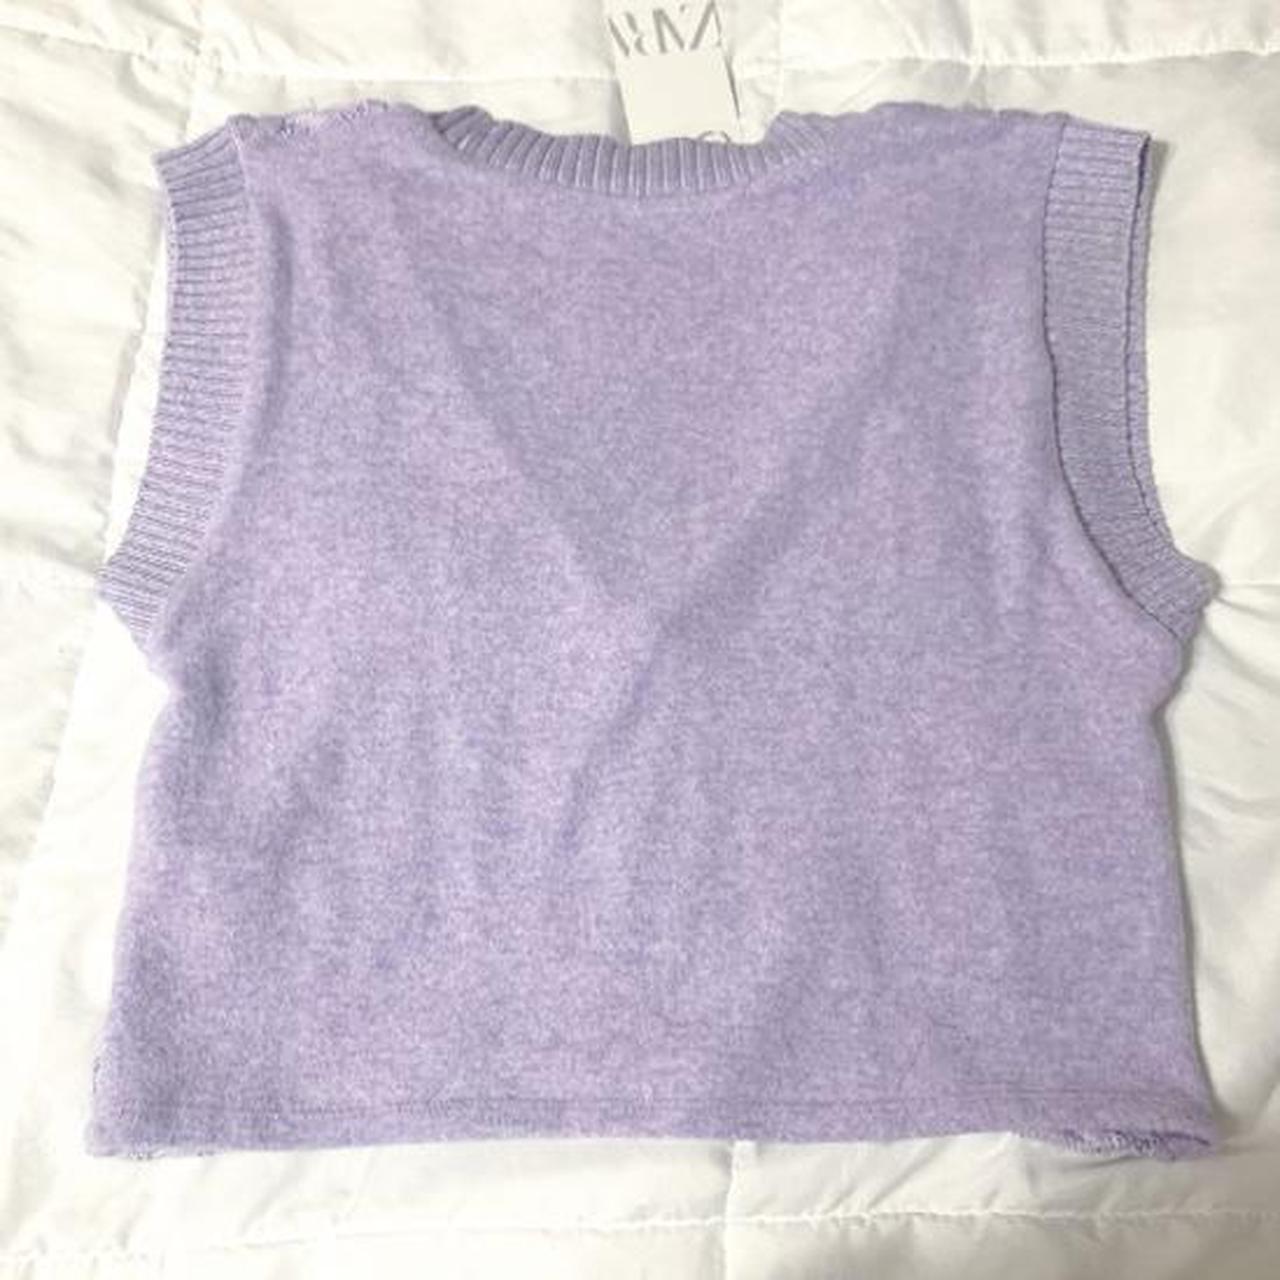 Product Image 2 - BNWT Zara purple sweater vest